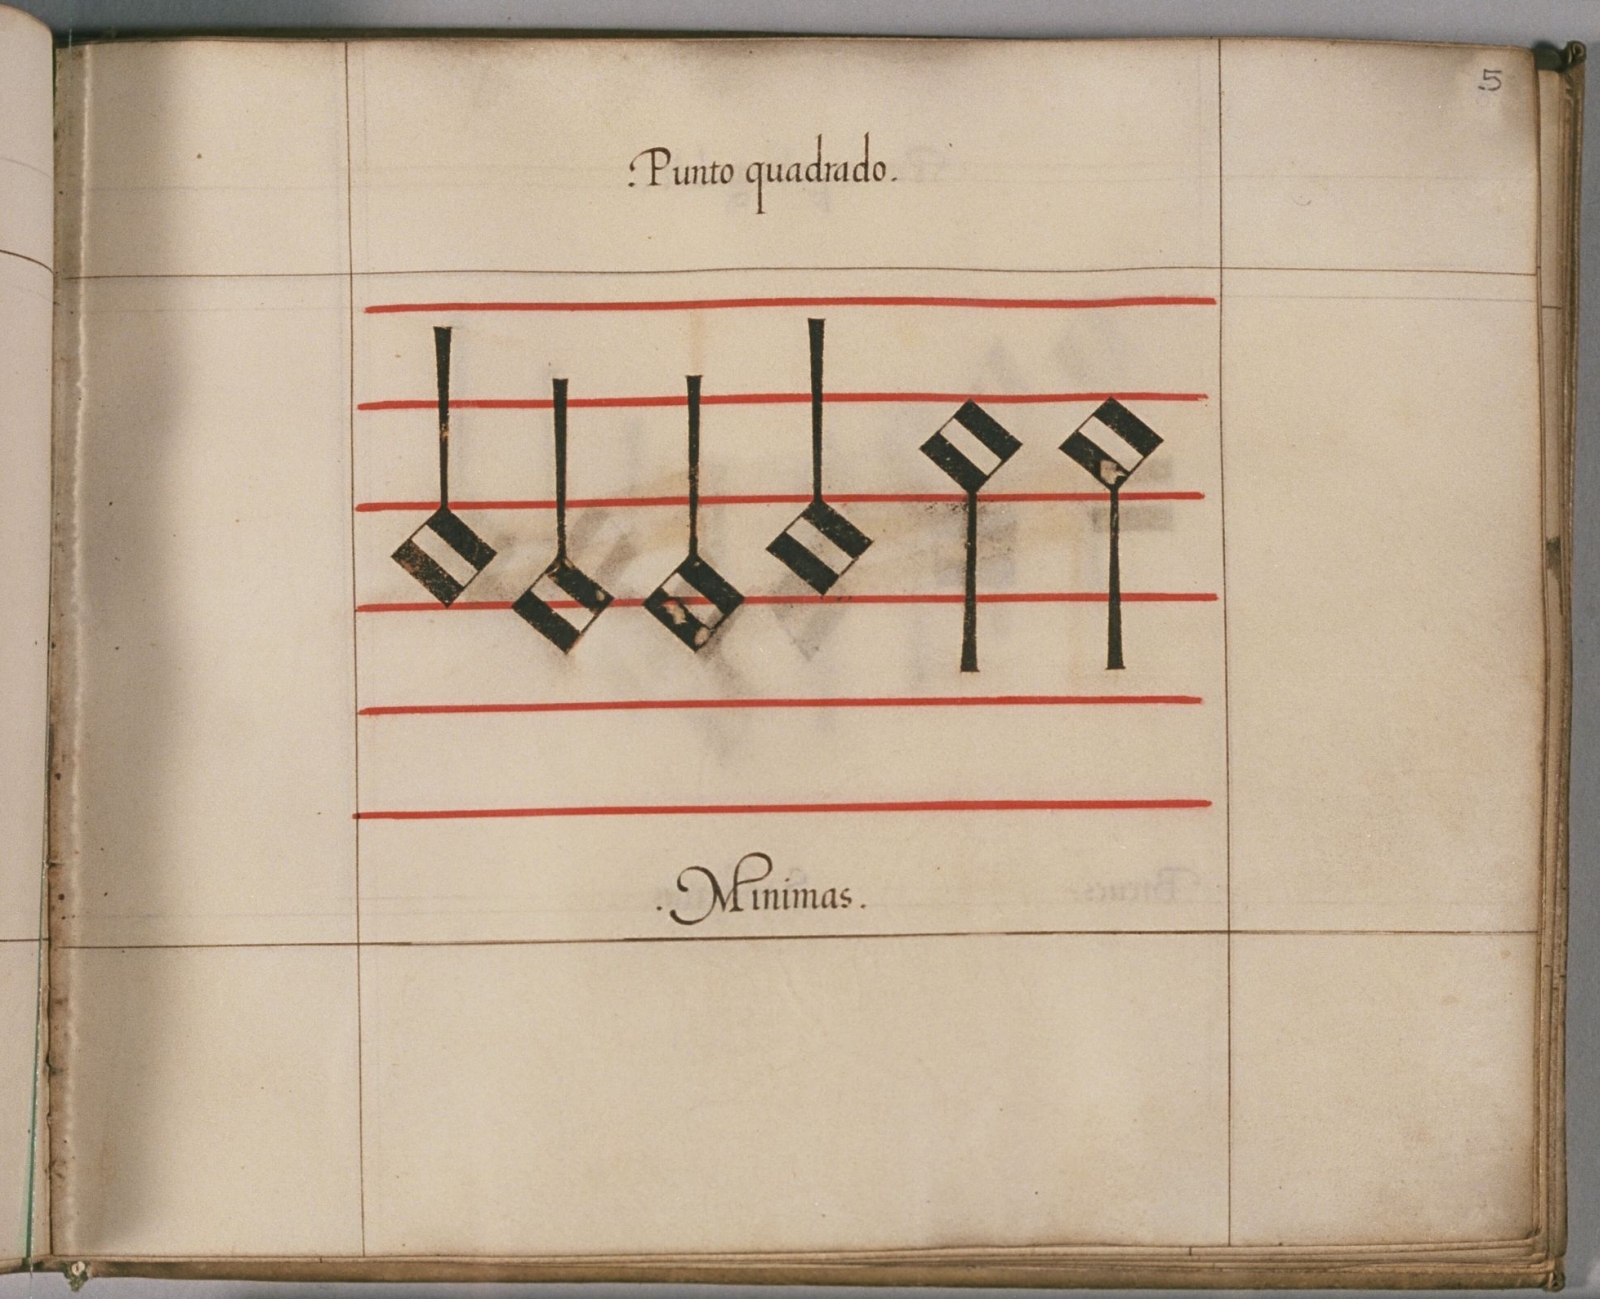 punto quadrado (minimas) - 16th century musical illumination